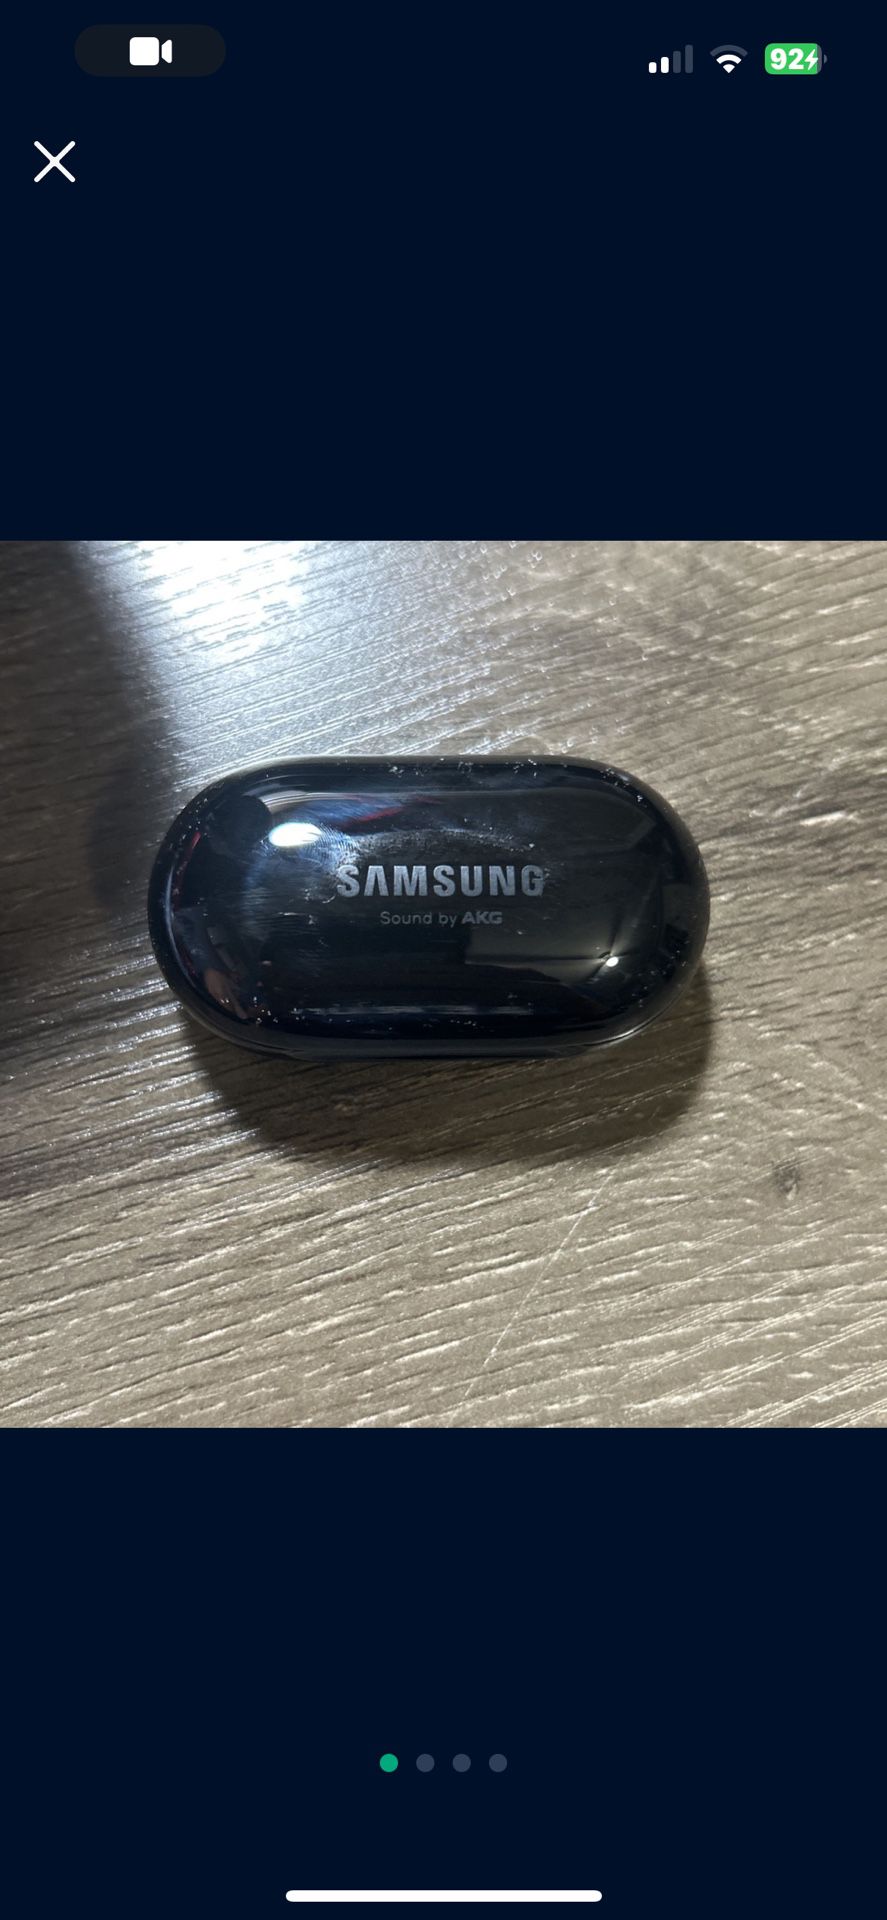 Samsung Galaxy Headphones